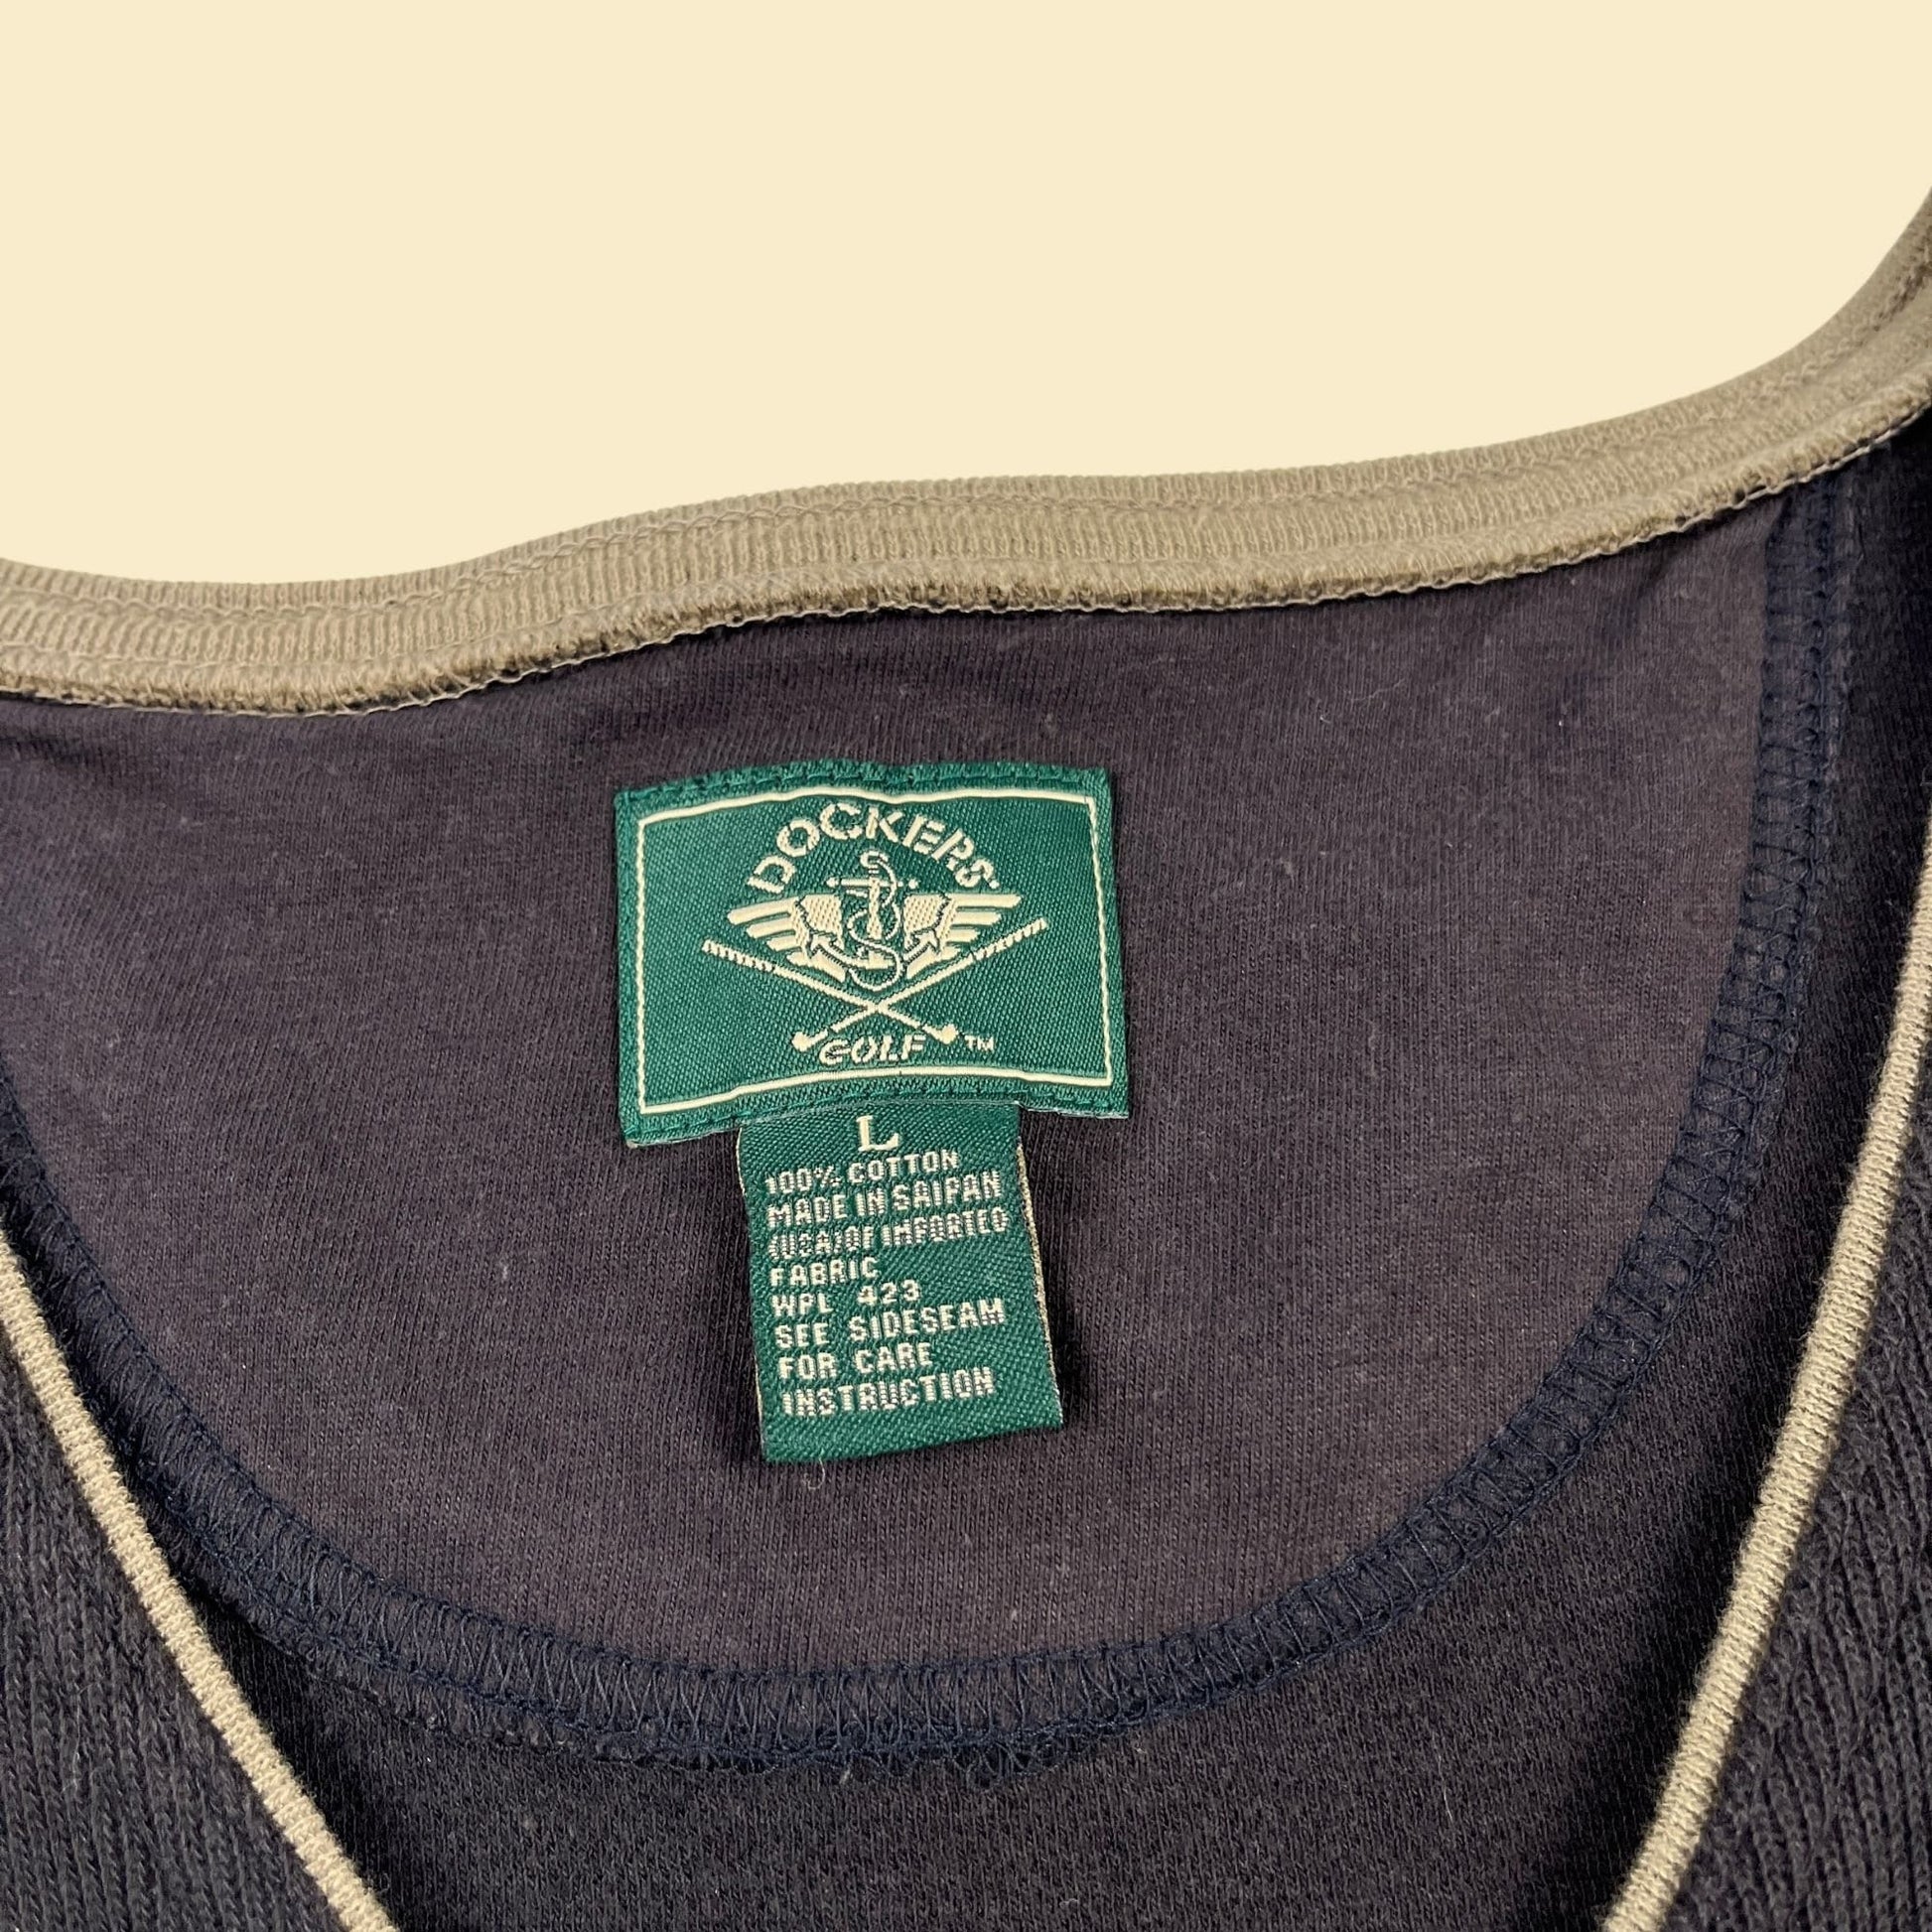 90s size L golf vest, men's black & green sweater vest by Dockers Golf